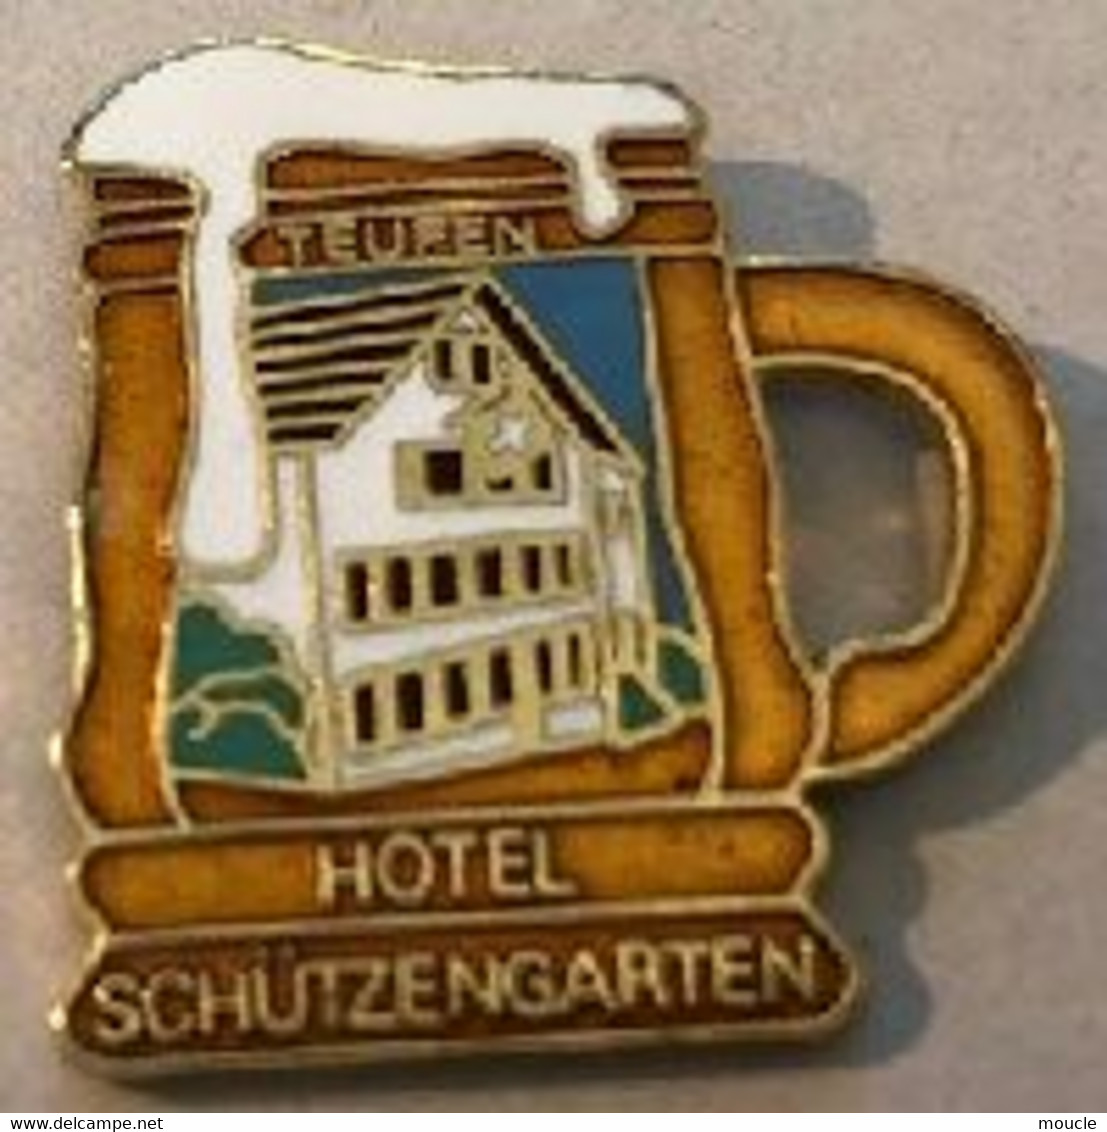 HÔTEL SCHÜTZENGARTEN - CHOPPE - BIER  BIERE- SUISSE - SCHWEIZ - SWITZERLAND - SVIZZERA - TEUFEN - EGF - BEER -  (30) - Cerveza